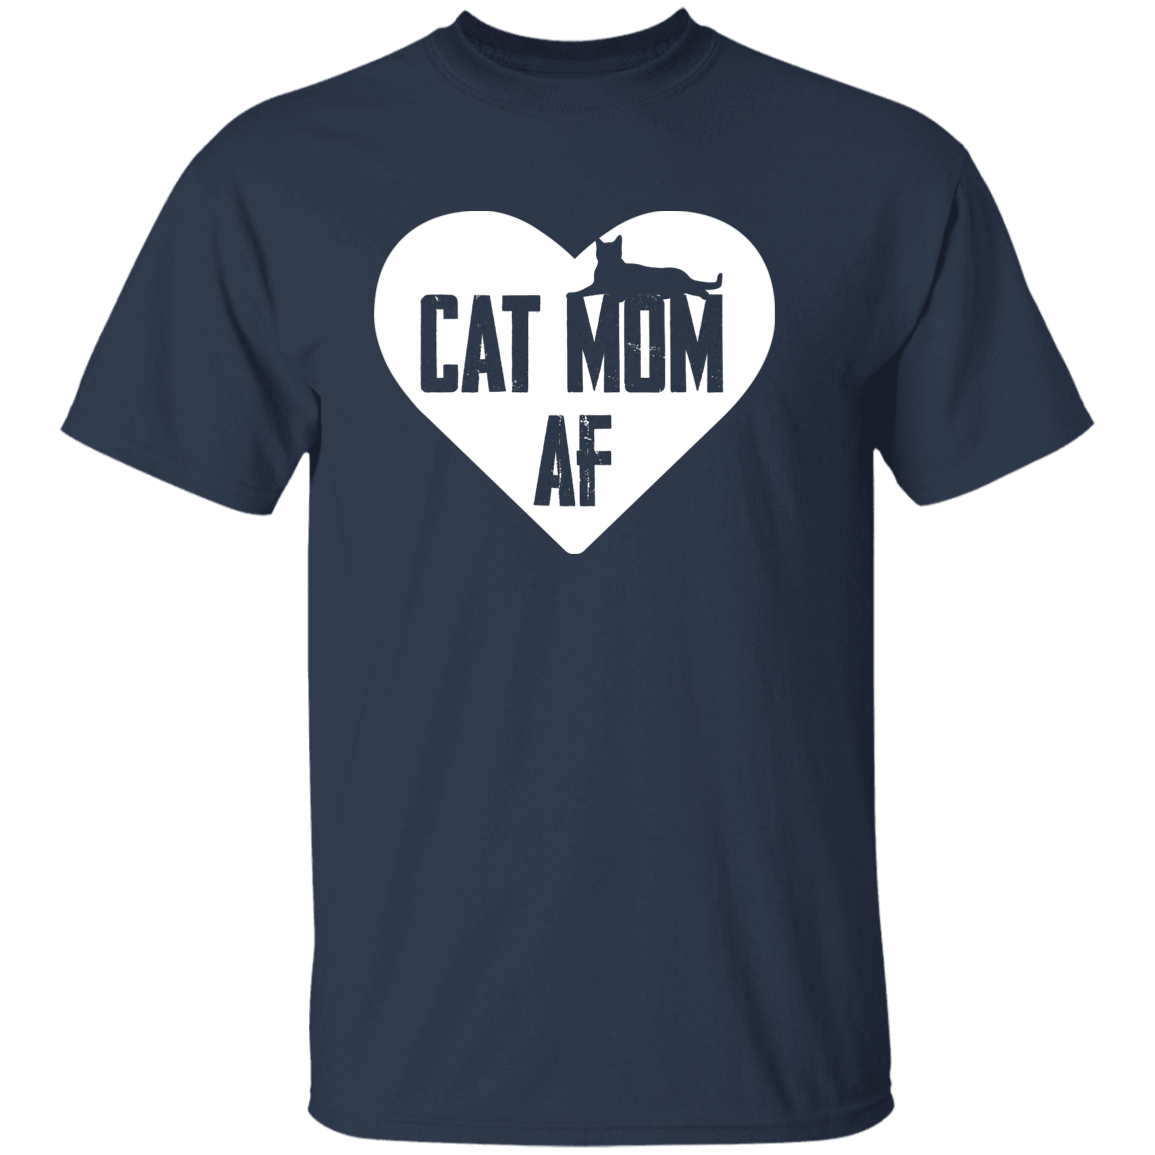 Cat Mom AF - T Shirt.